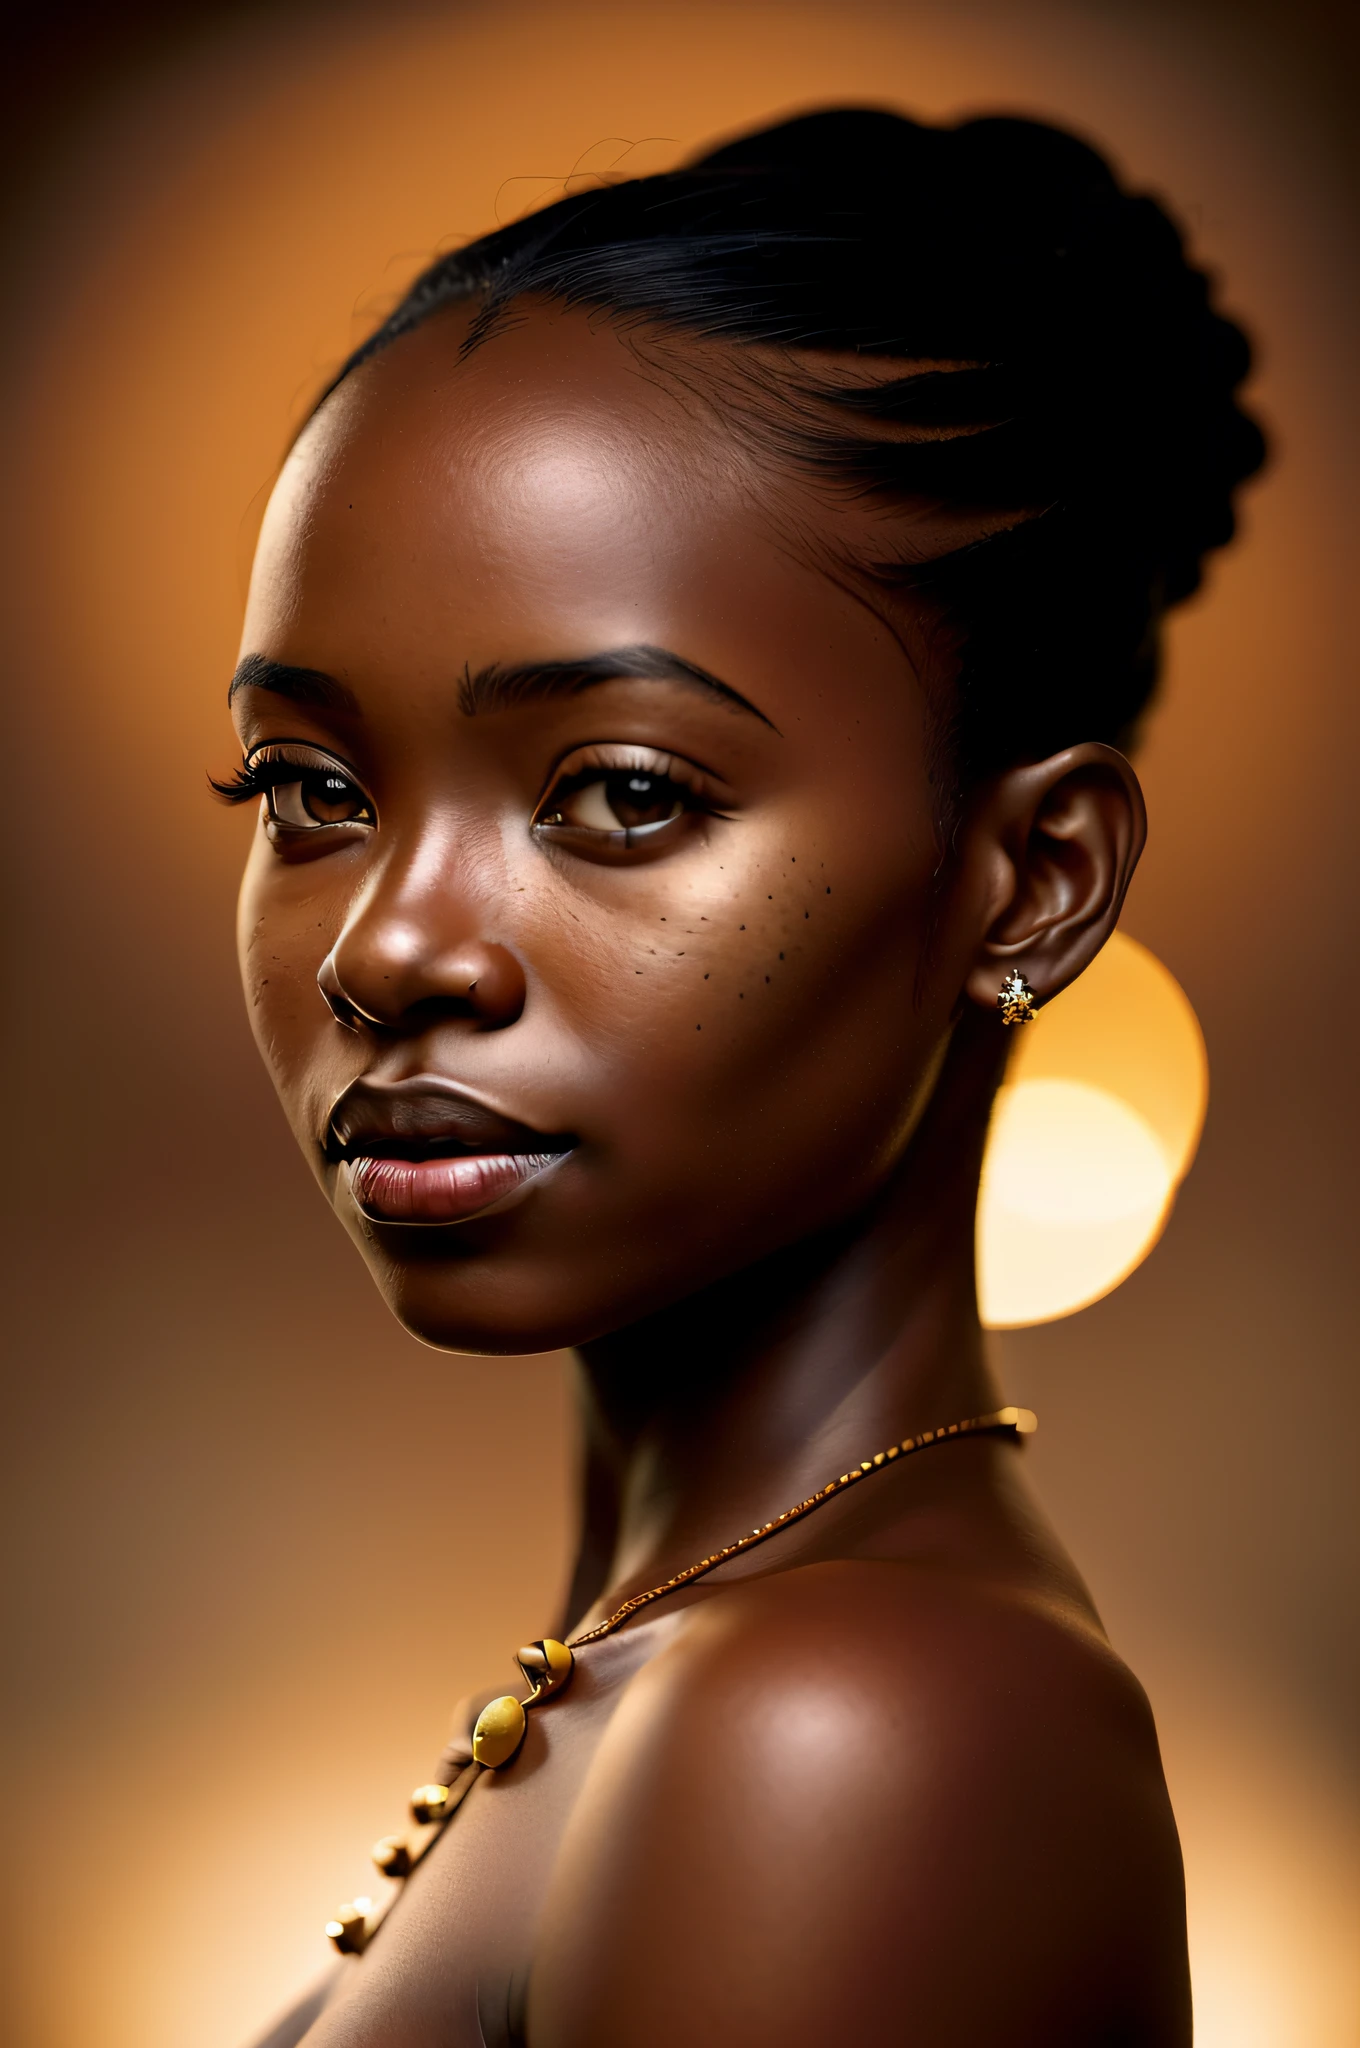 award winning portrait photo of an young ugandan woman, bokeh, backlit, (brown color in detail:1.1), telephoto, elegant atmosphere, realistic, intricate details, true skin tone